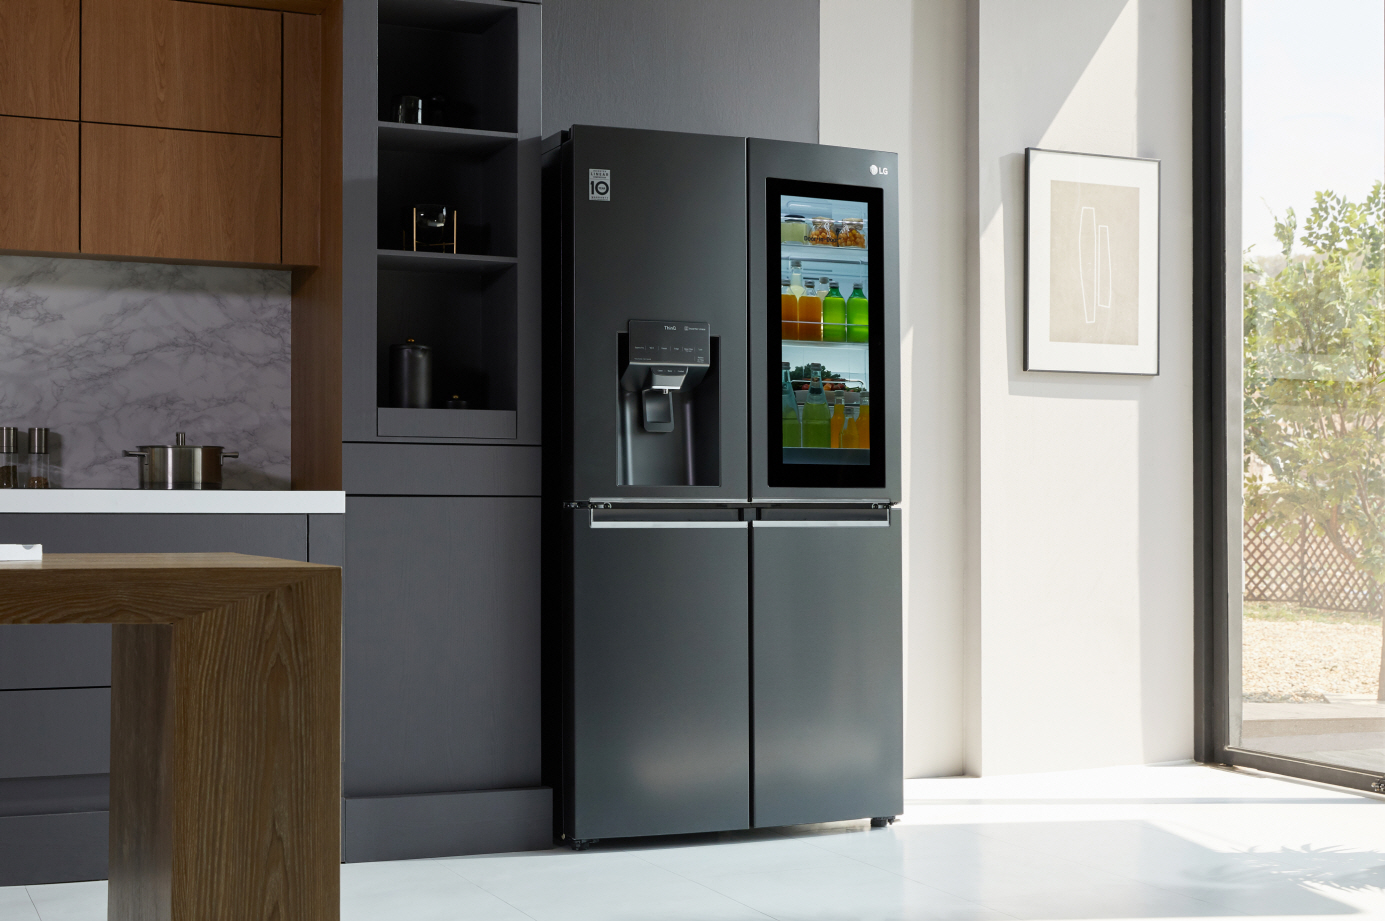 Smart Refrigerator Features